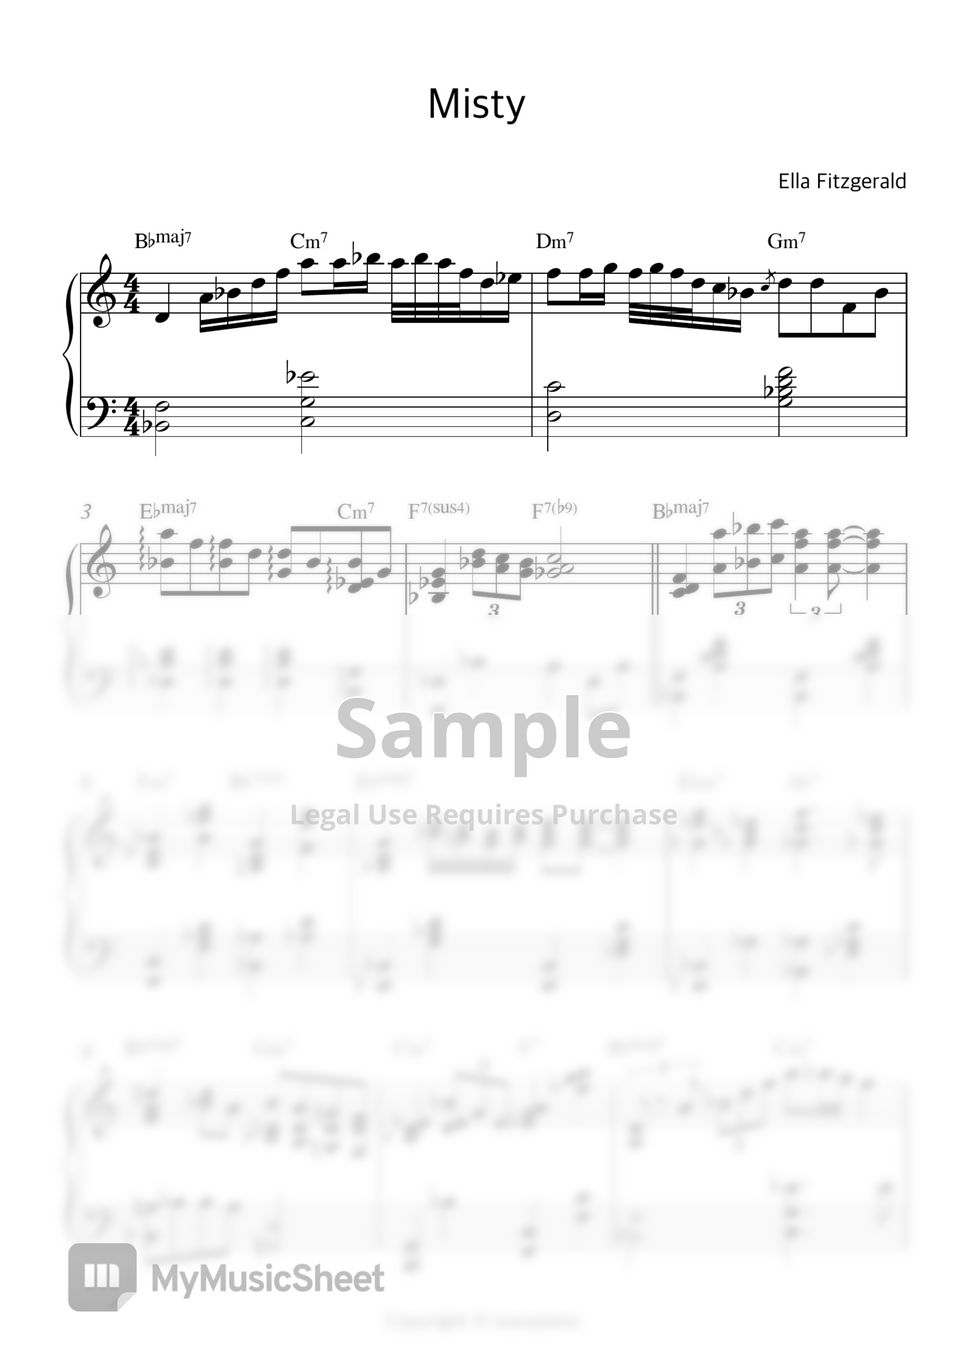 Ella Fitzgerald - Misty (piano) by sosopiano